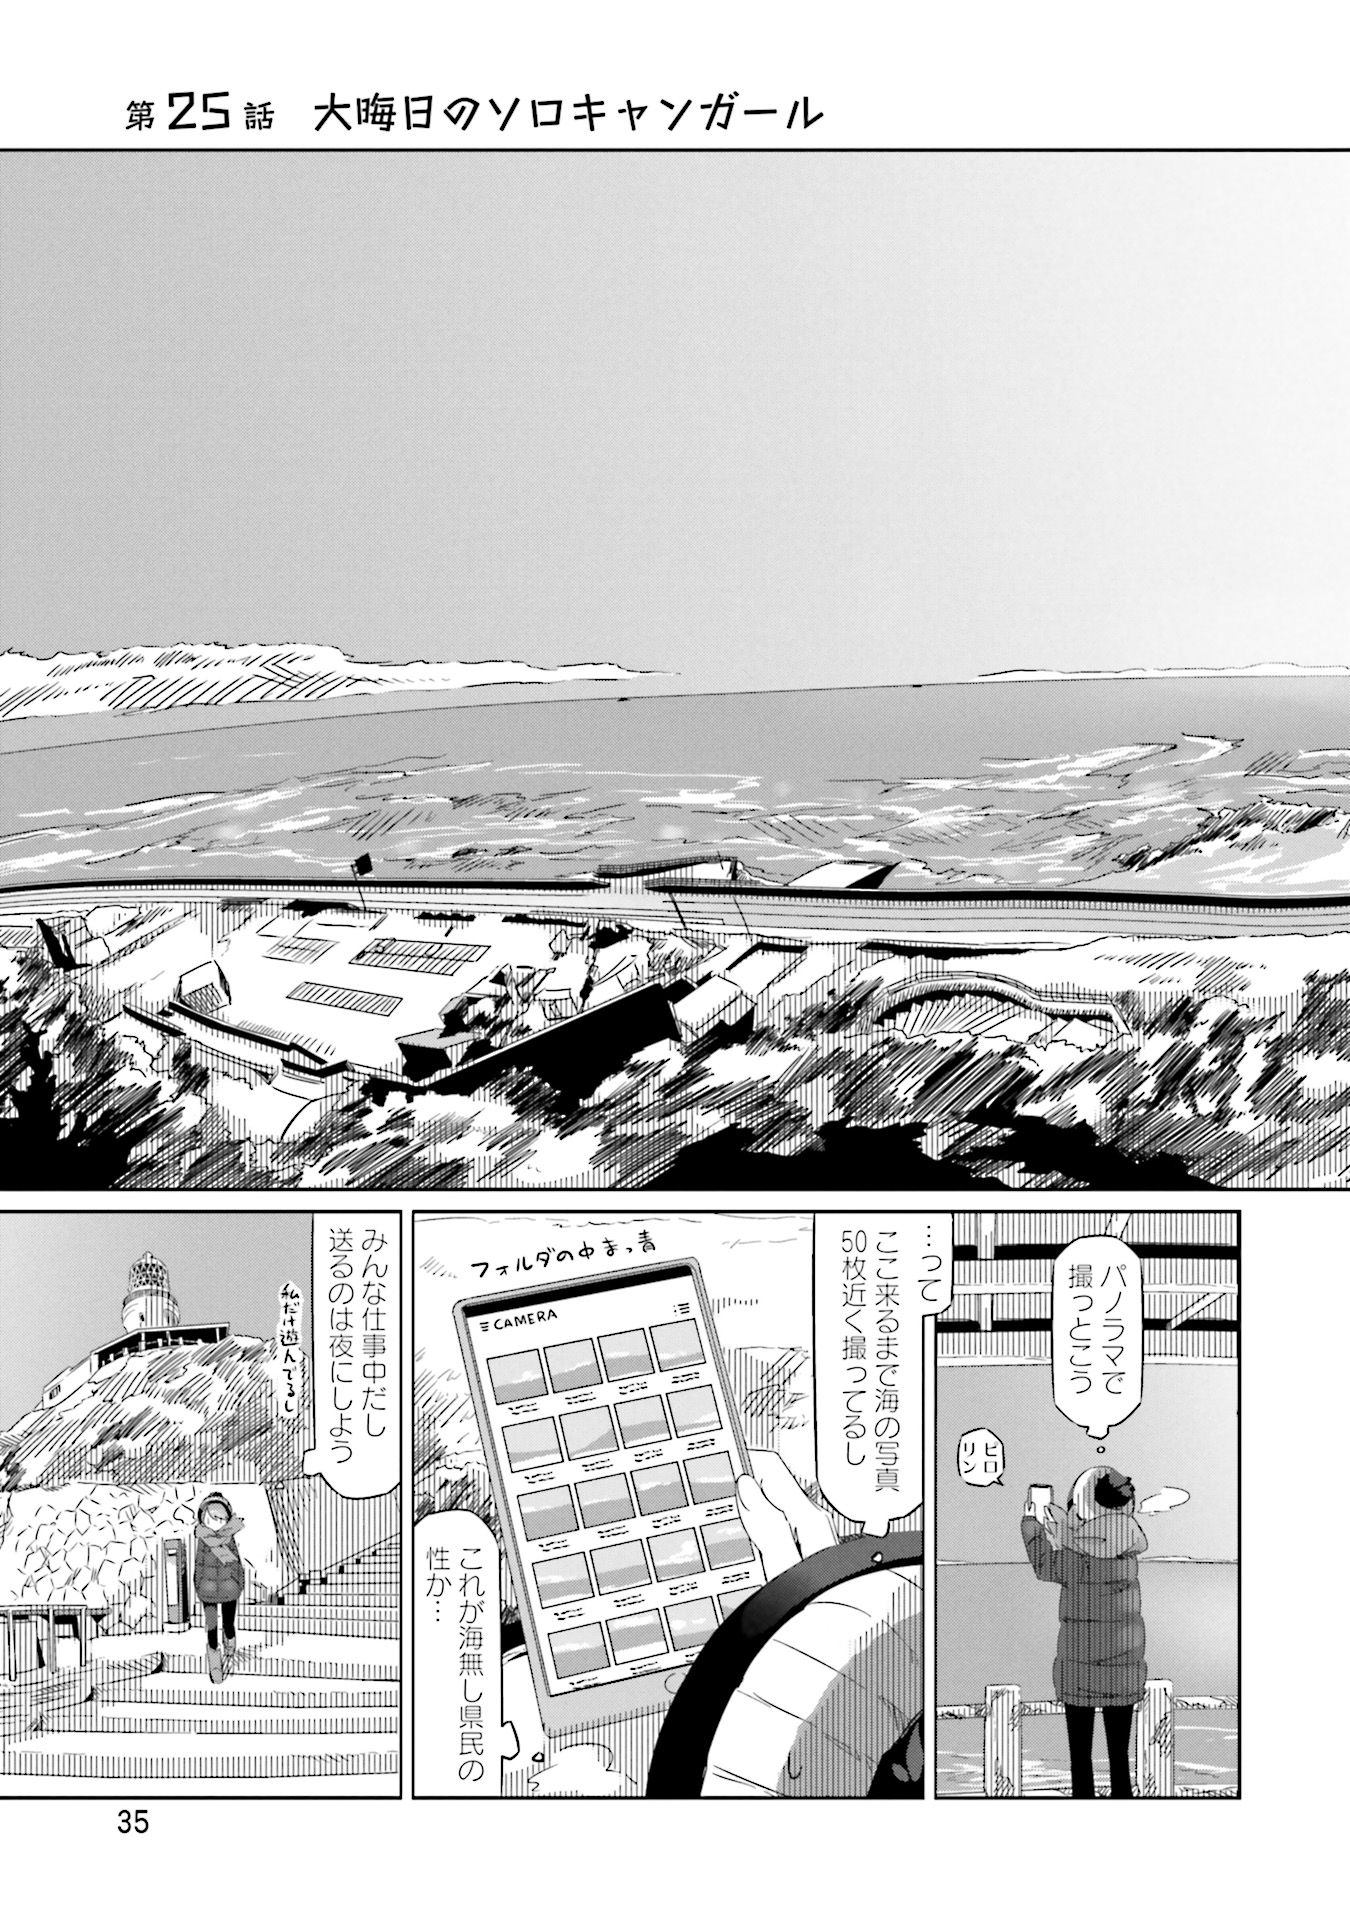 Yuru Camp - Chapter 25 - Page 3